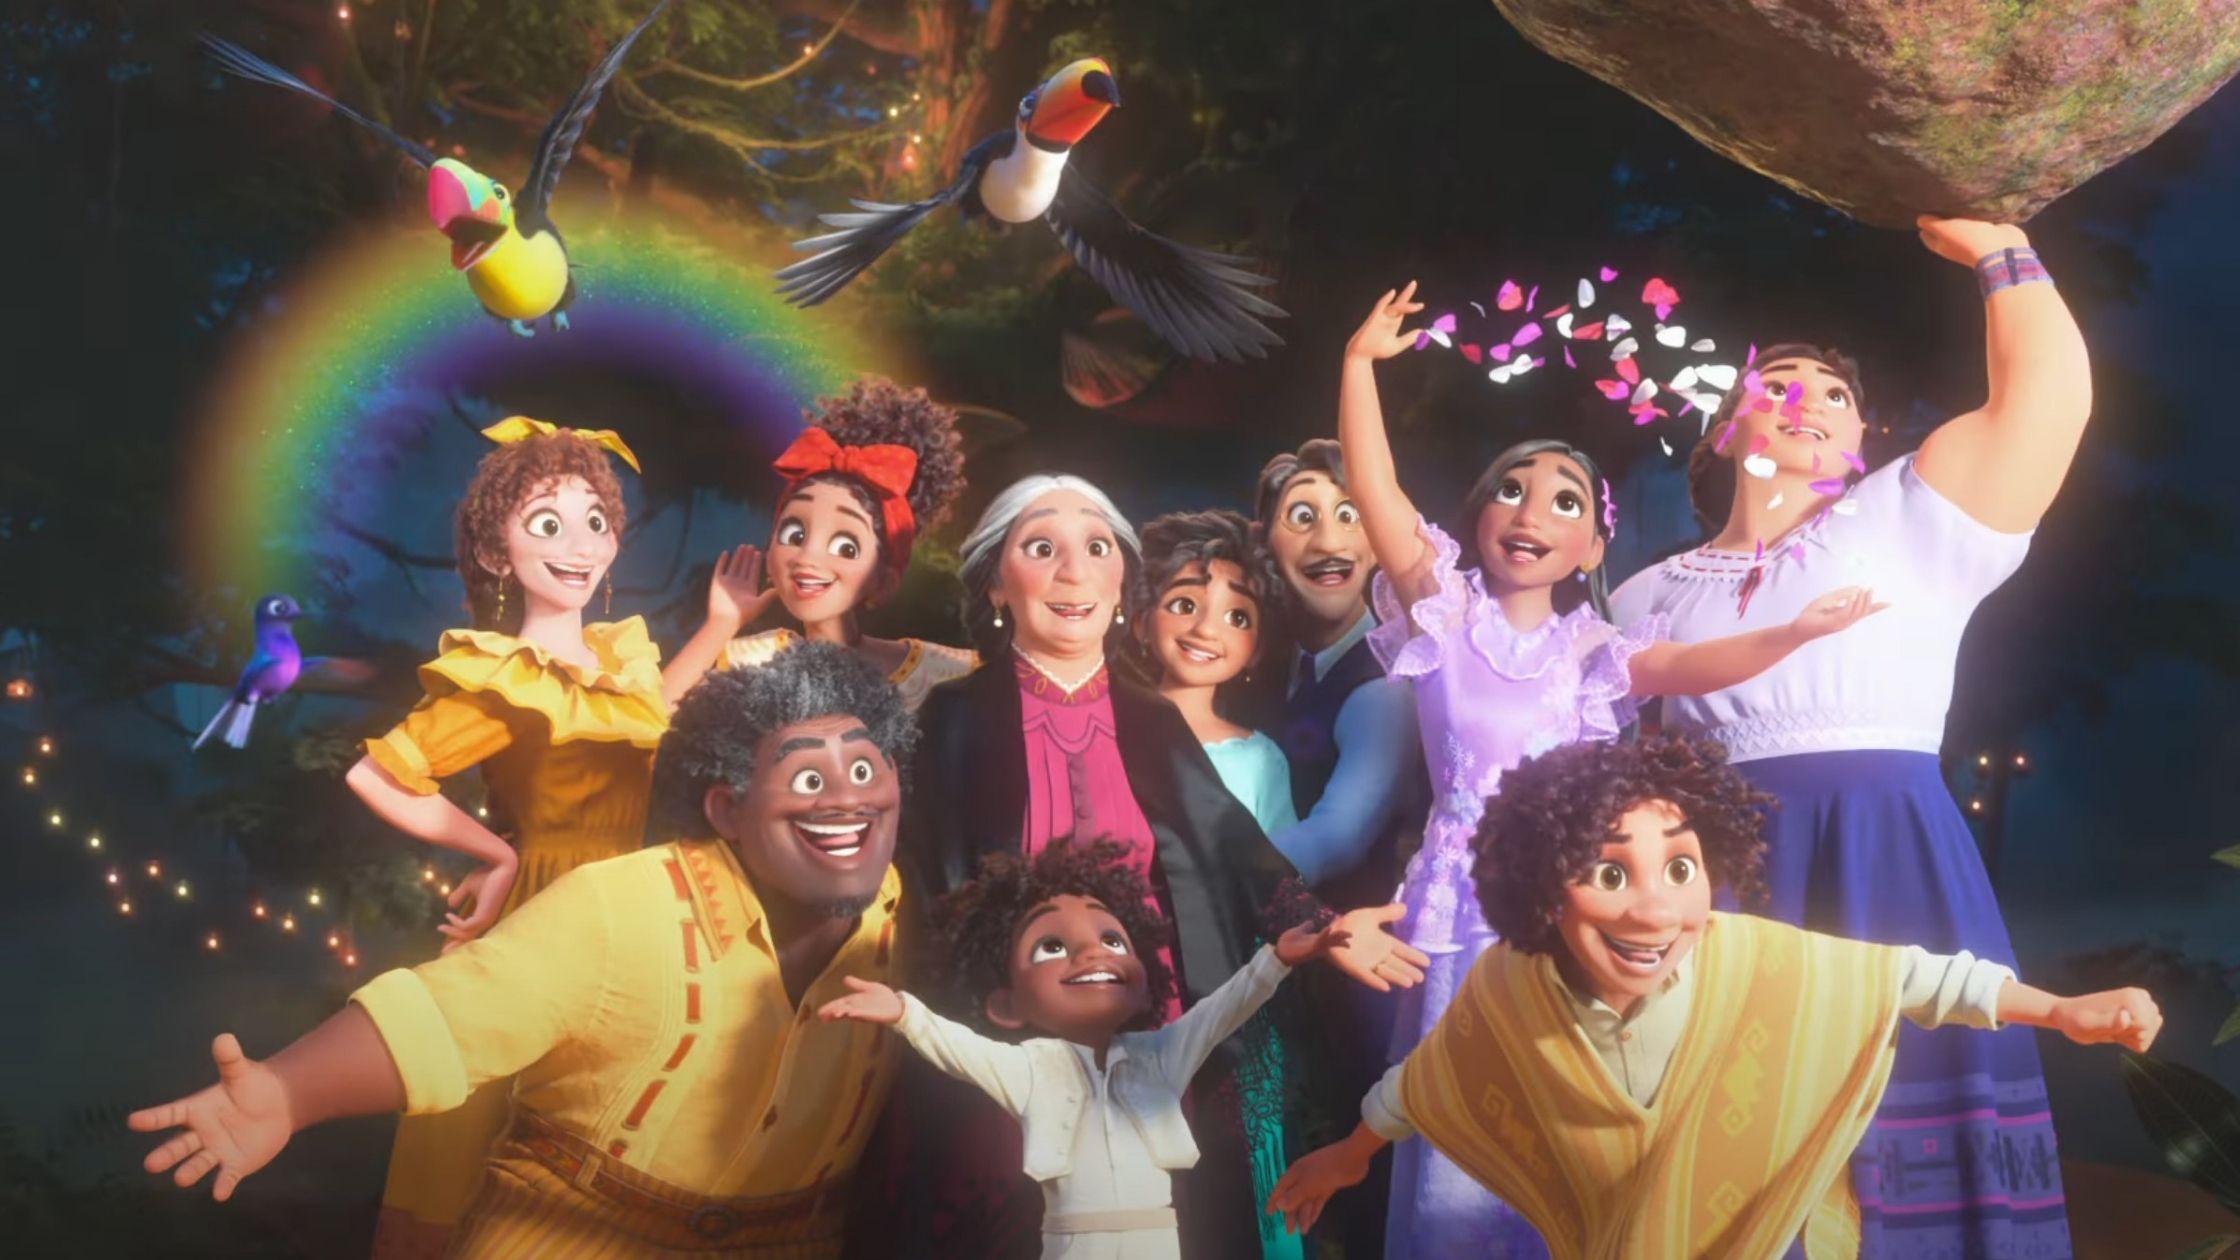 WATCH: 'Encanto' Disney Musical Releases Trailer